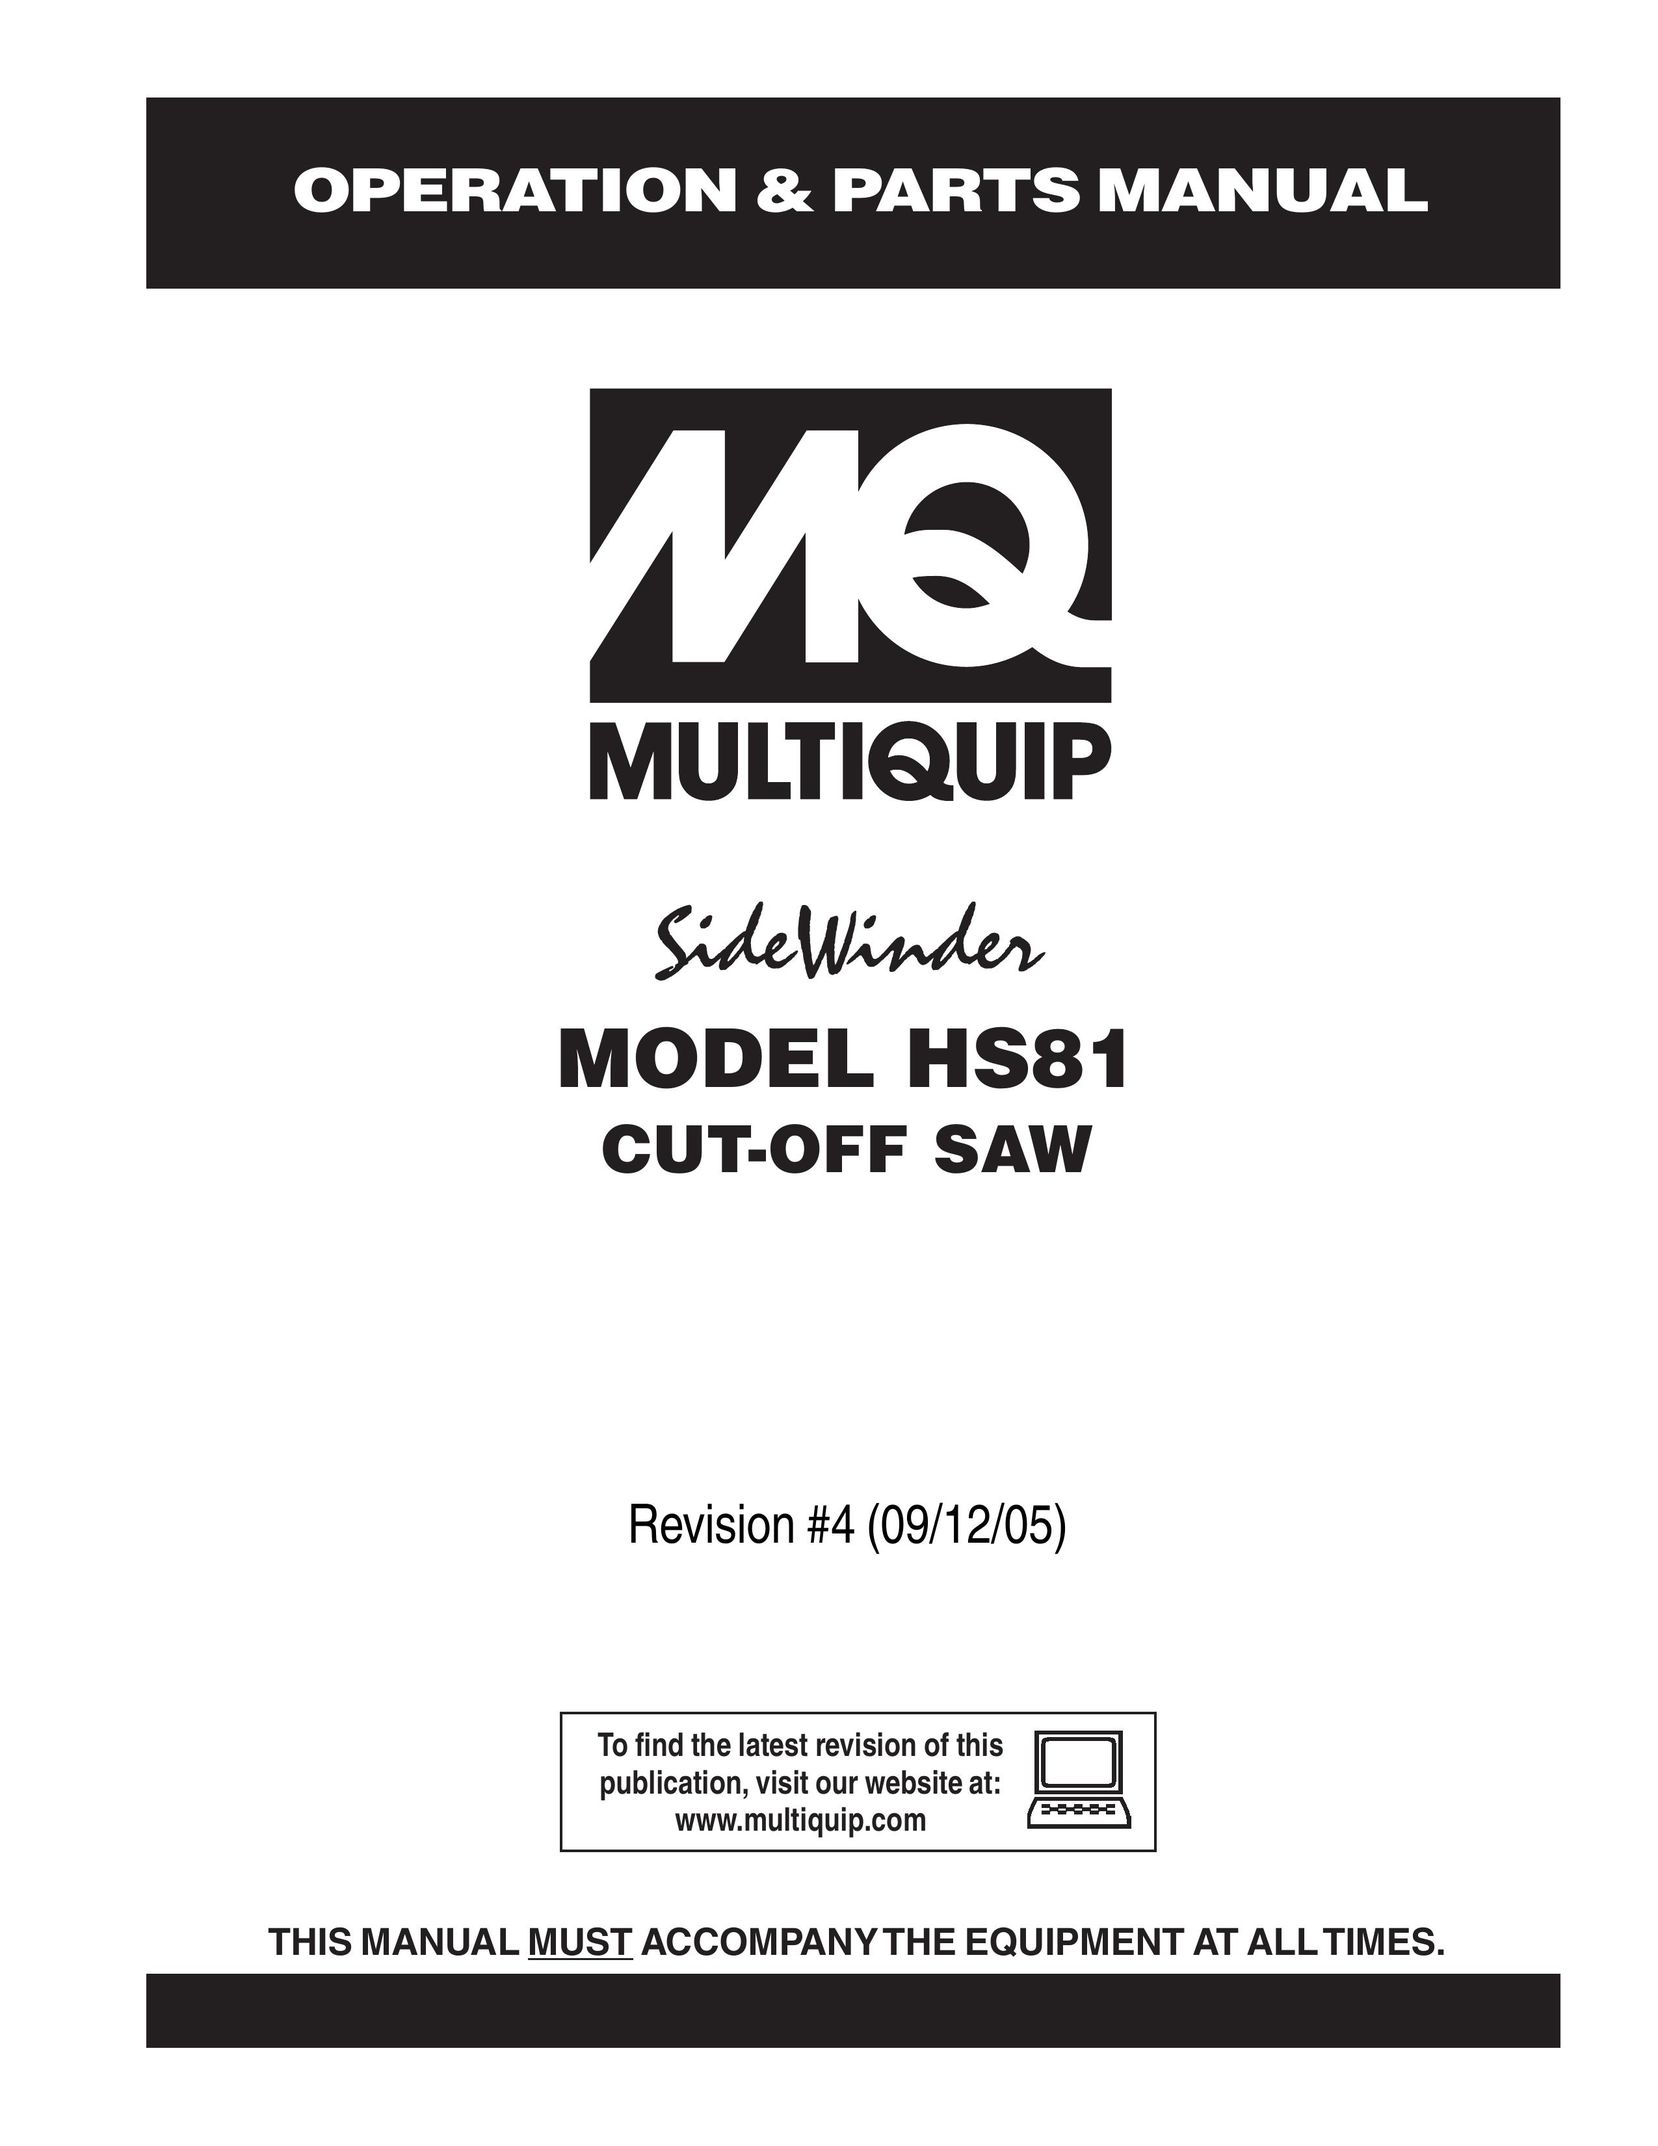 Multiquip HS81 Saw User Manual